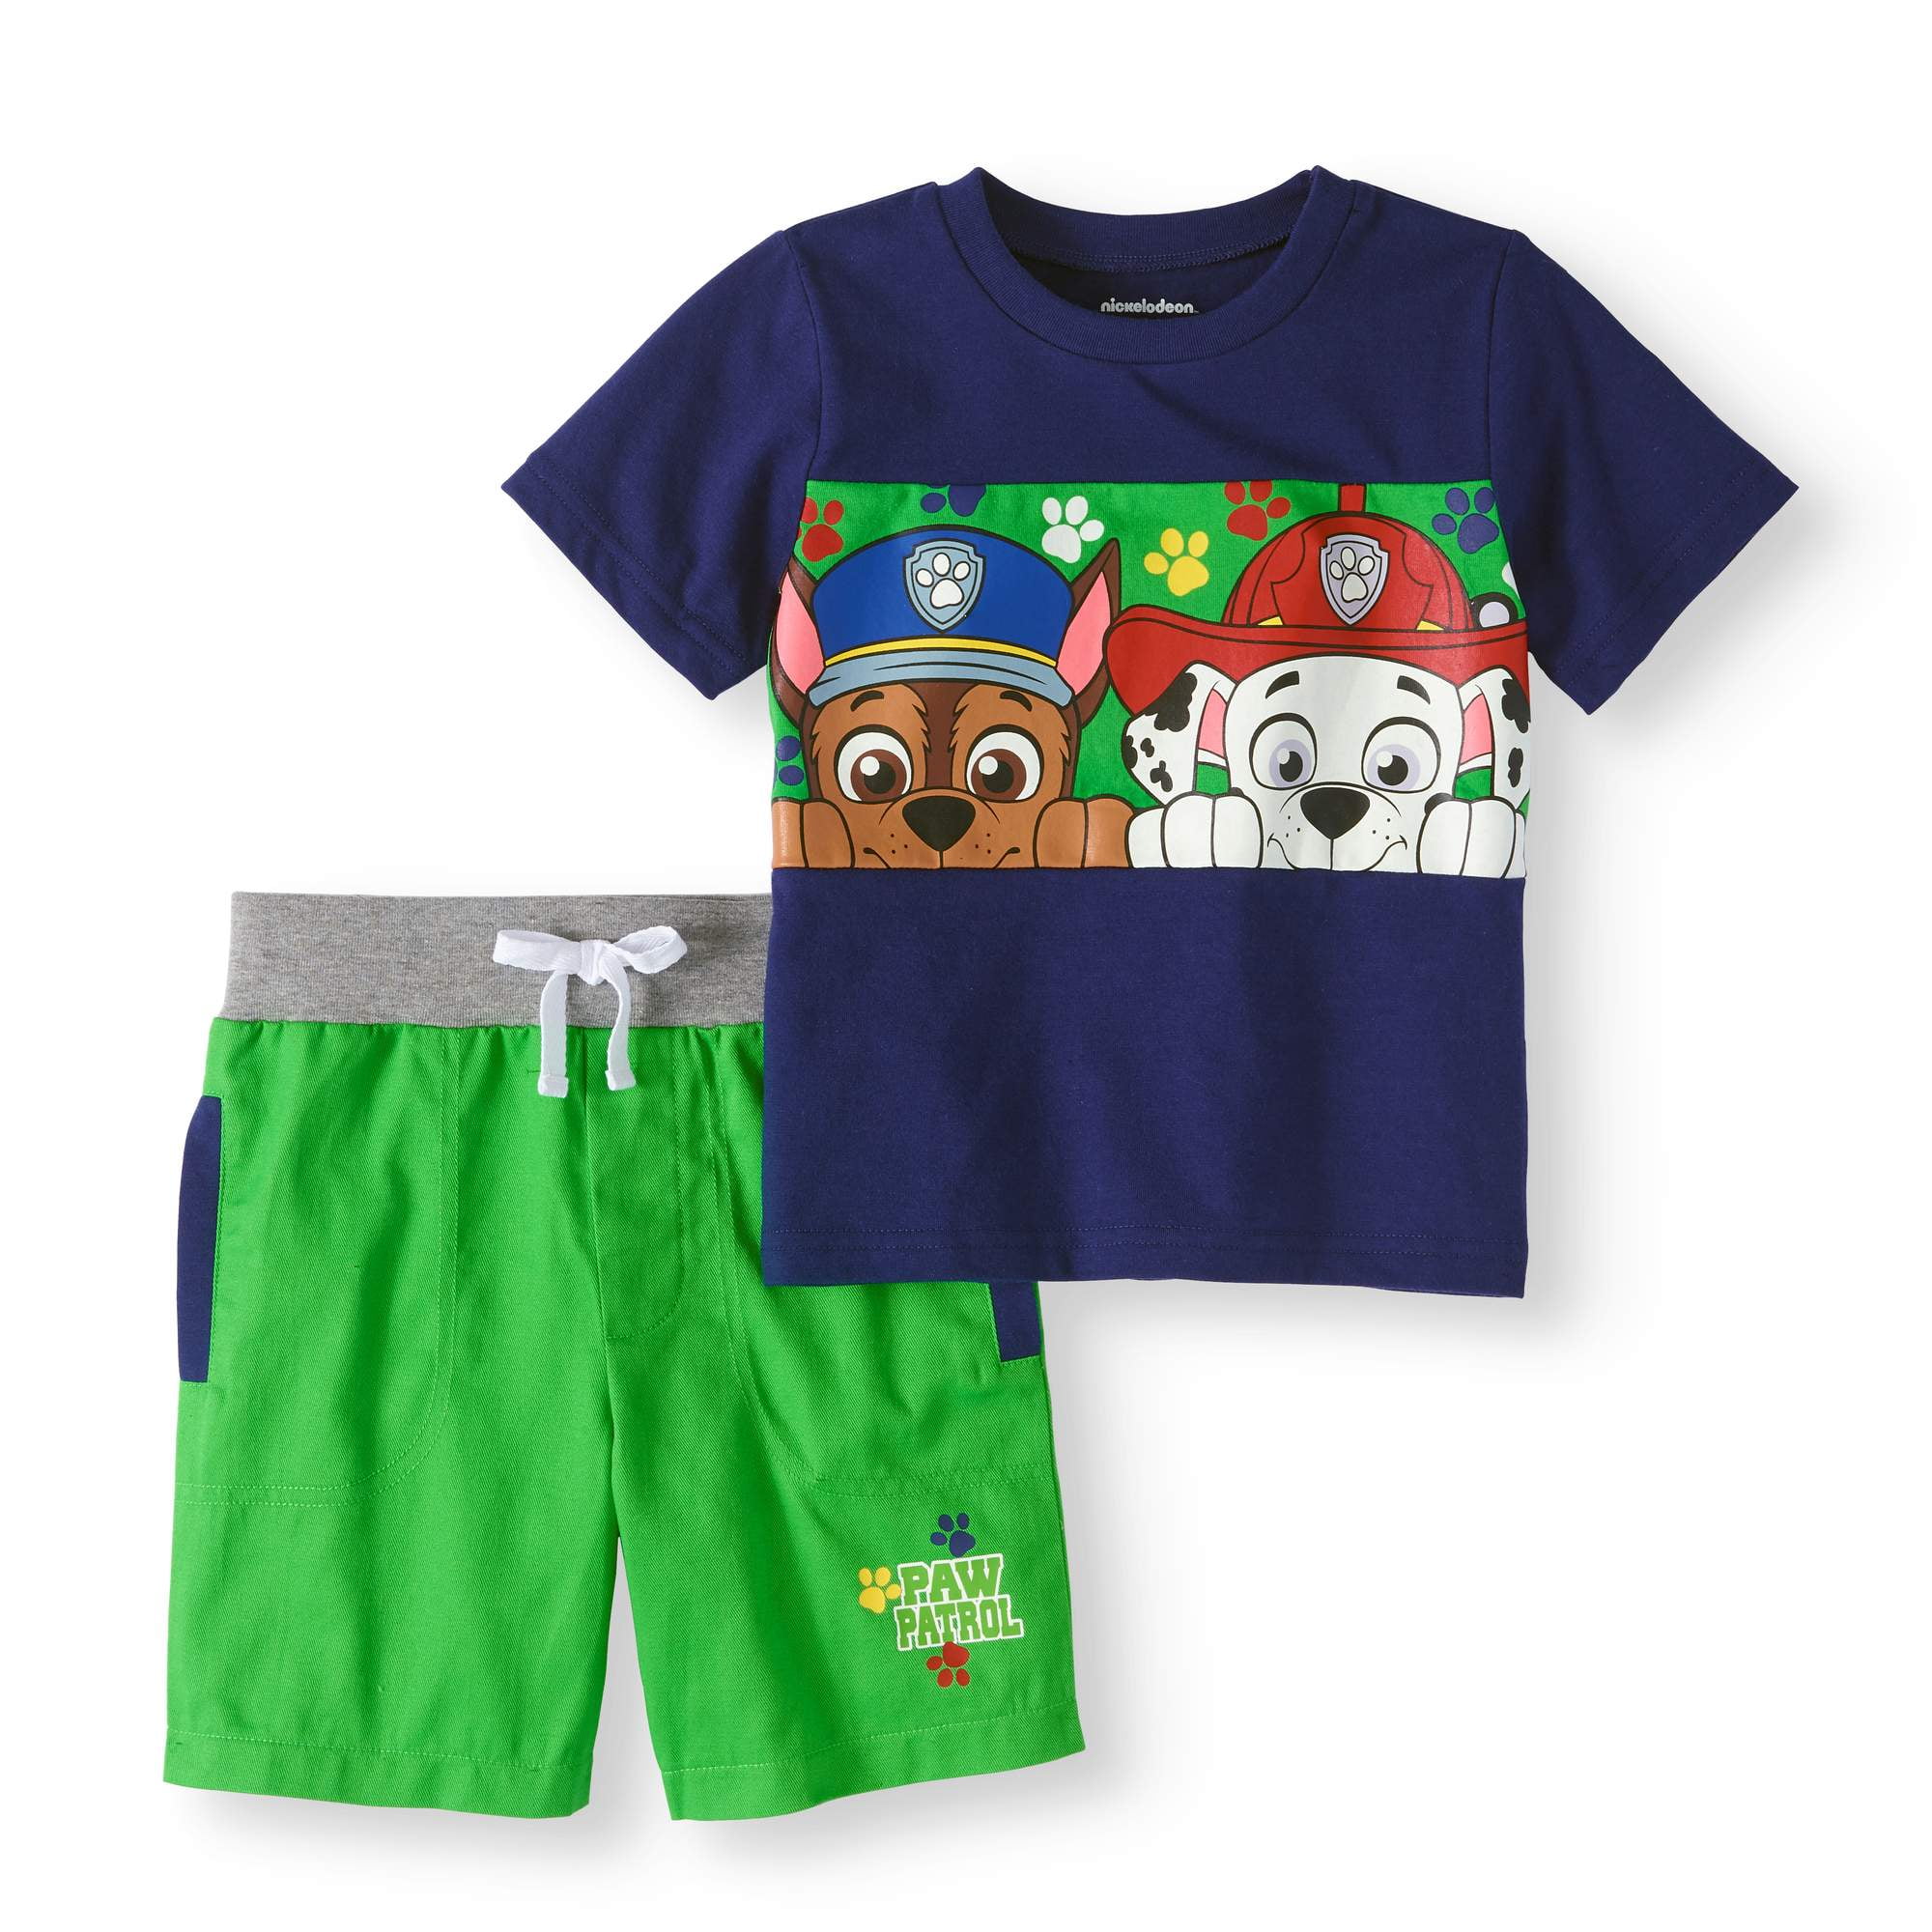 Nickelodeon Paw Patrol Boys 3-Piece Fleece Zip Jacket Jogger T-Shirt Set Toddler//Little Kid